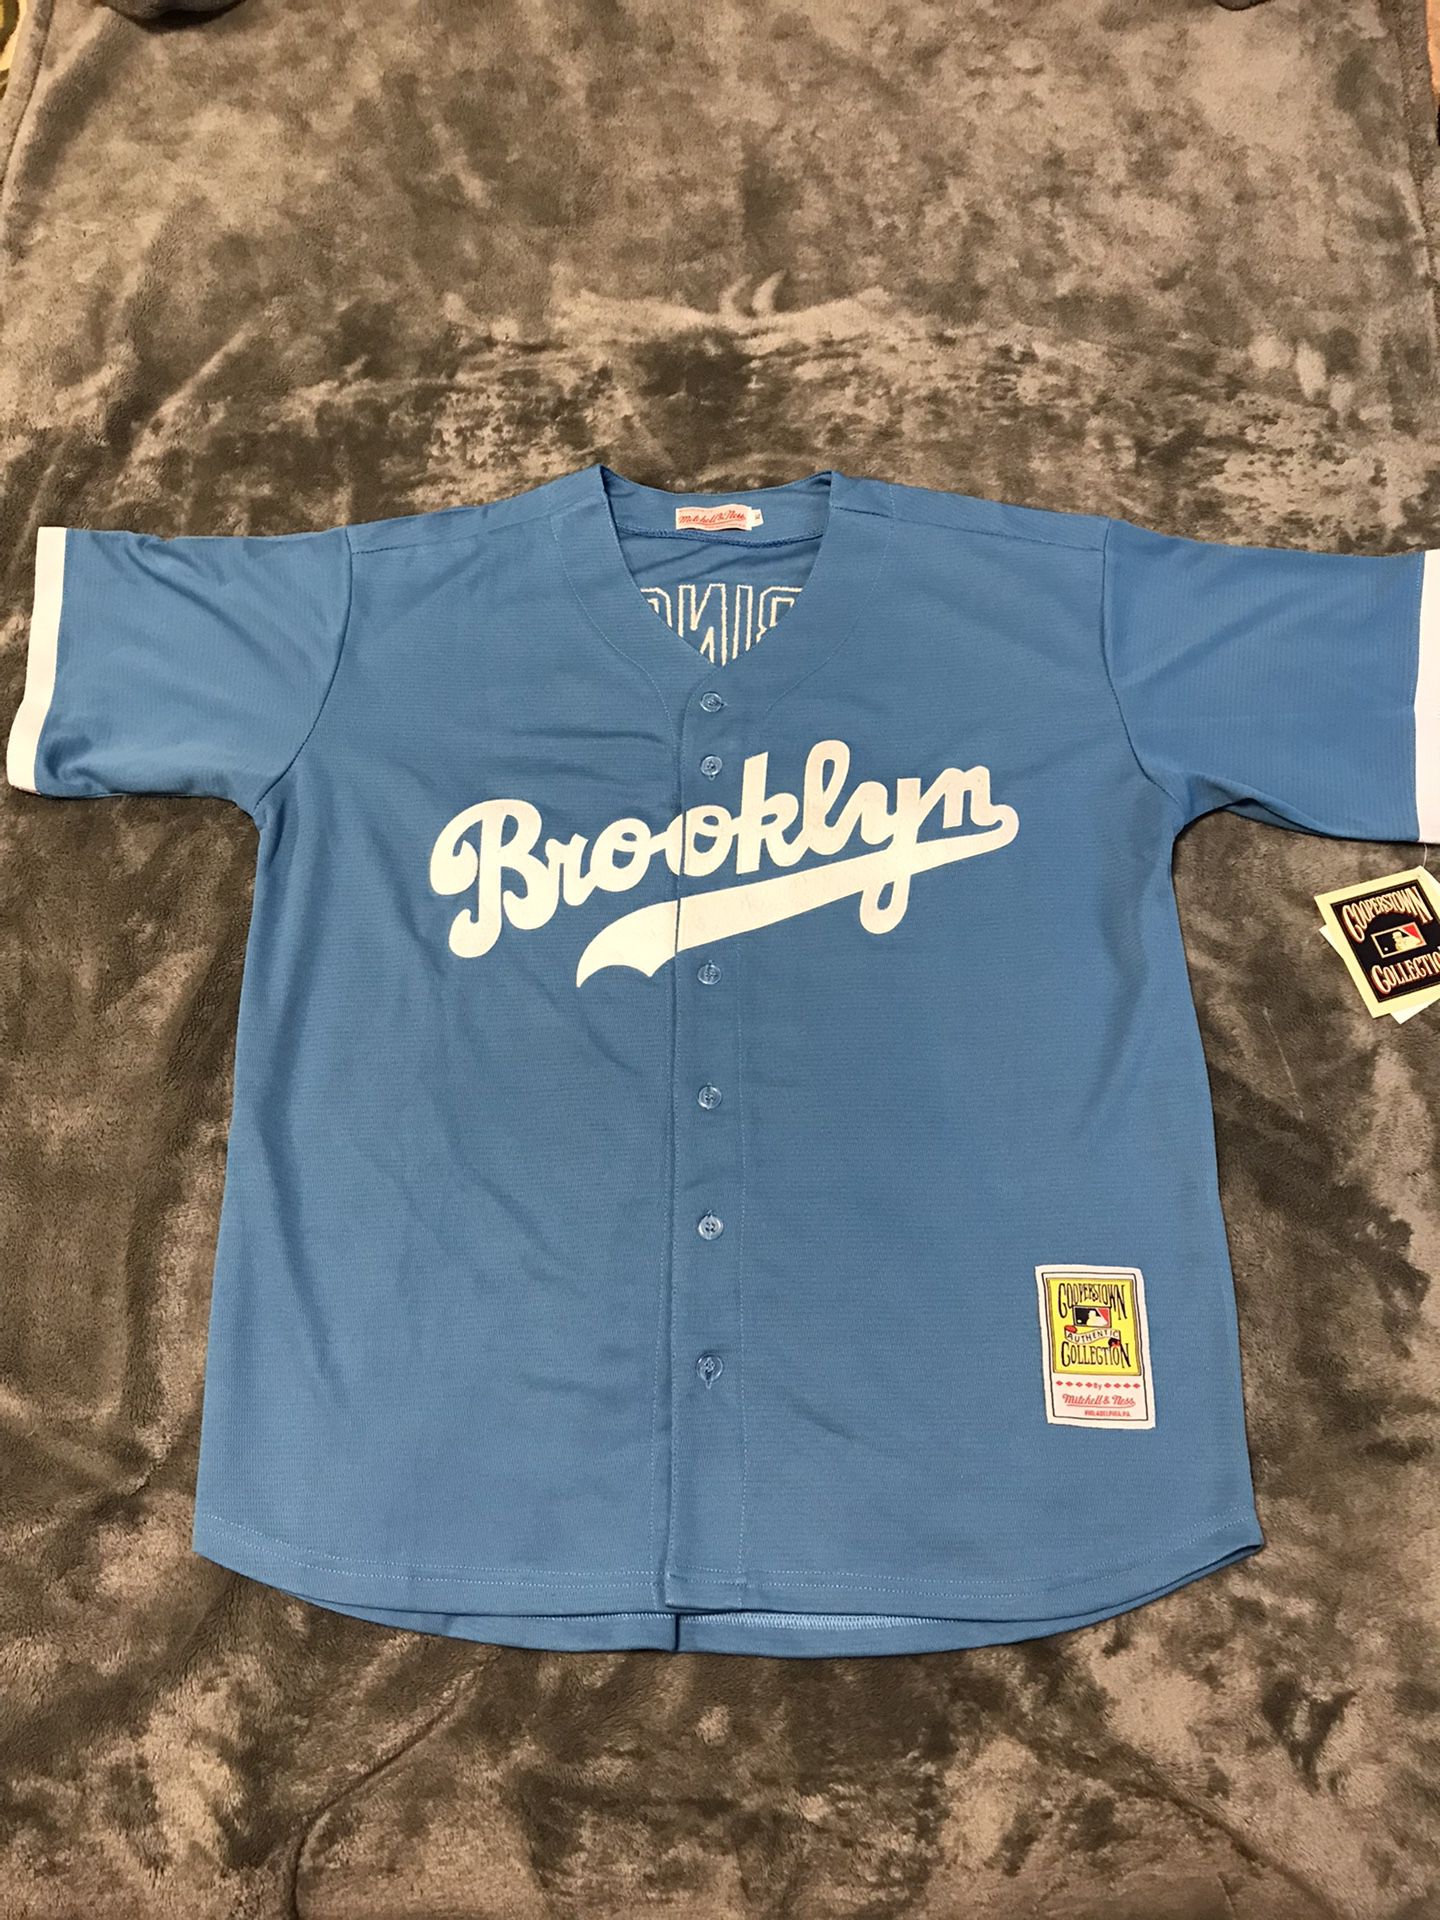 Brooklyn Dodgers Jackie Robinson Jersey for Sale in Houston, TX - OfferUp